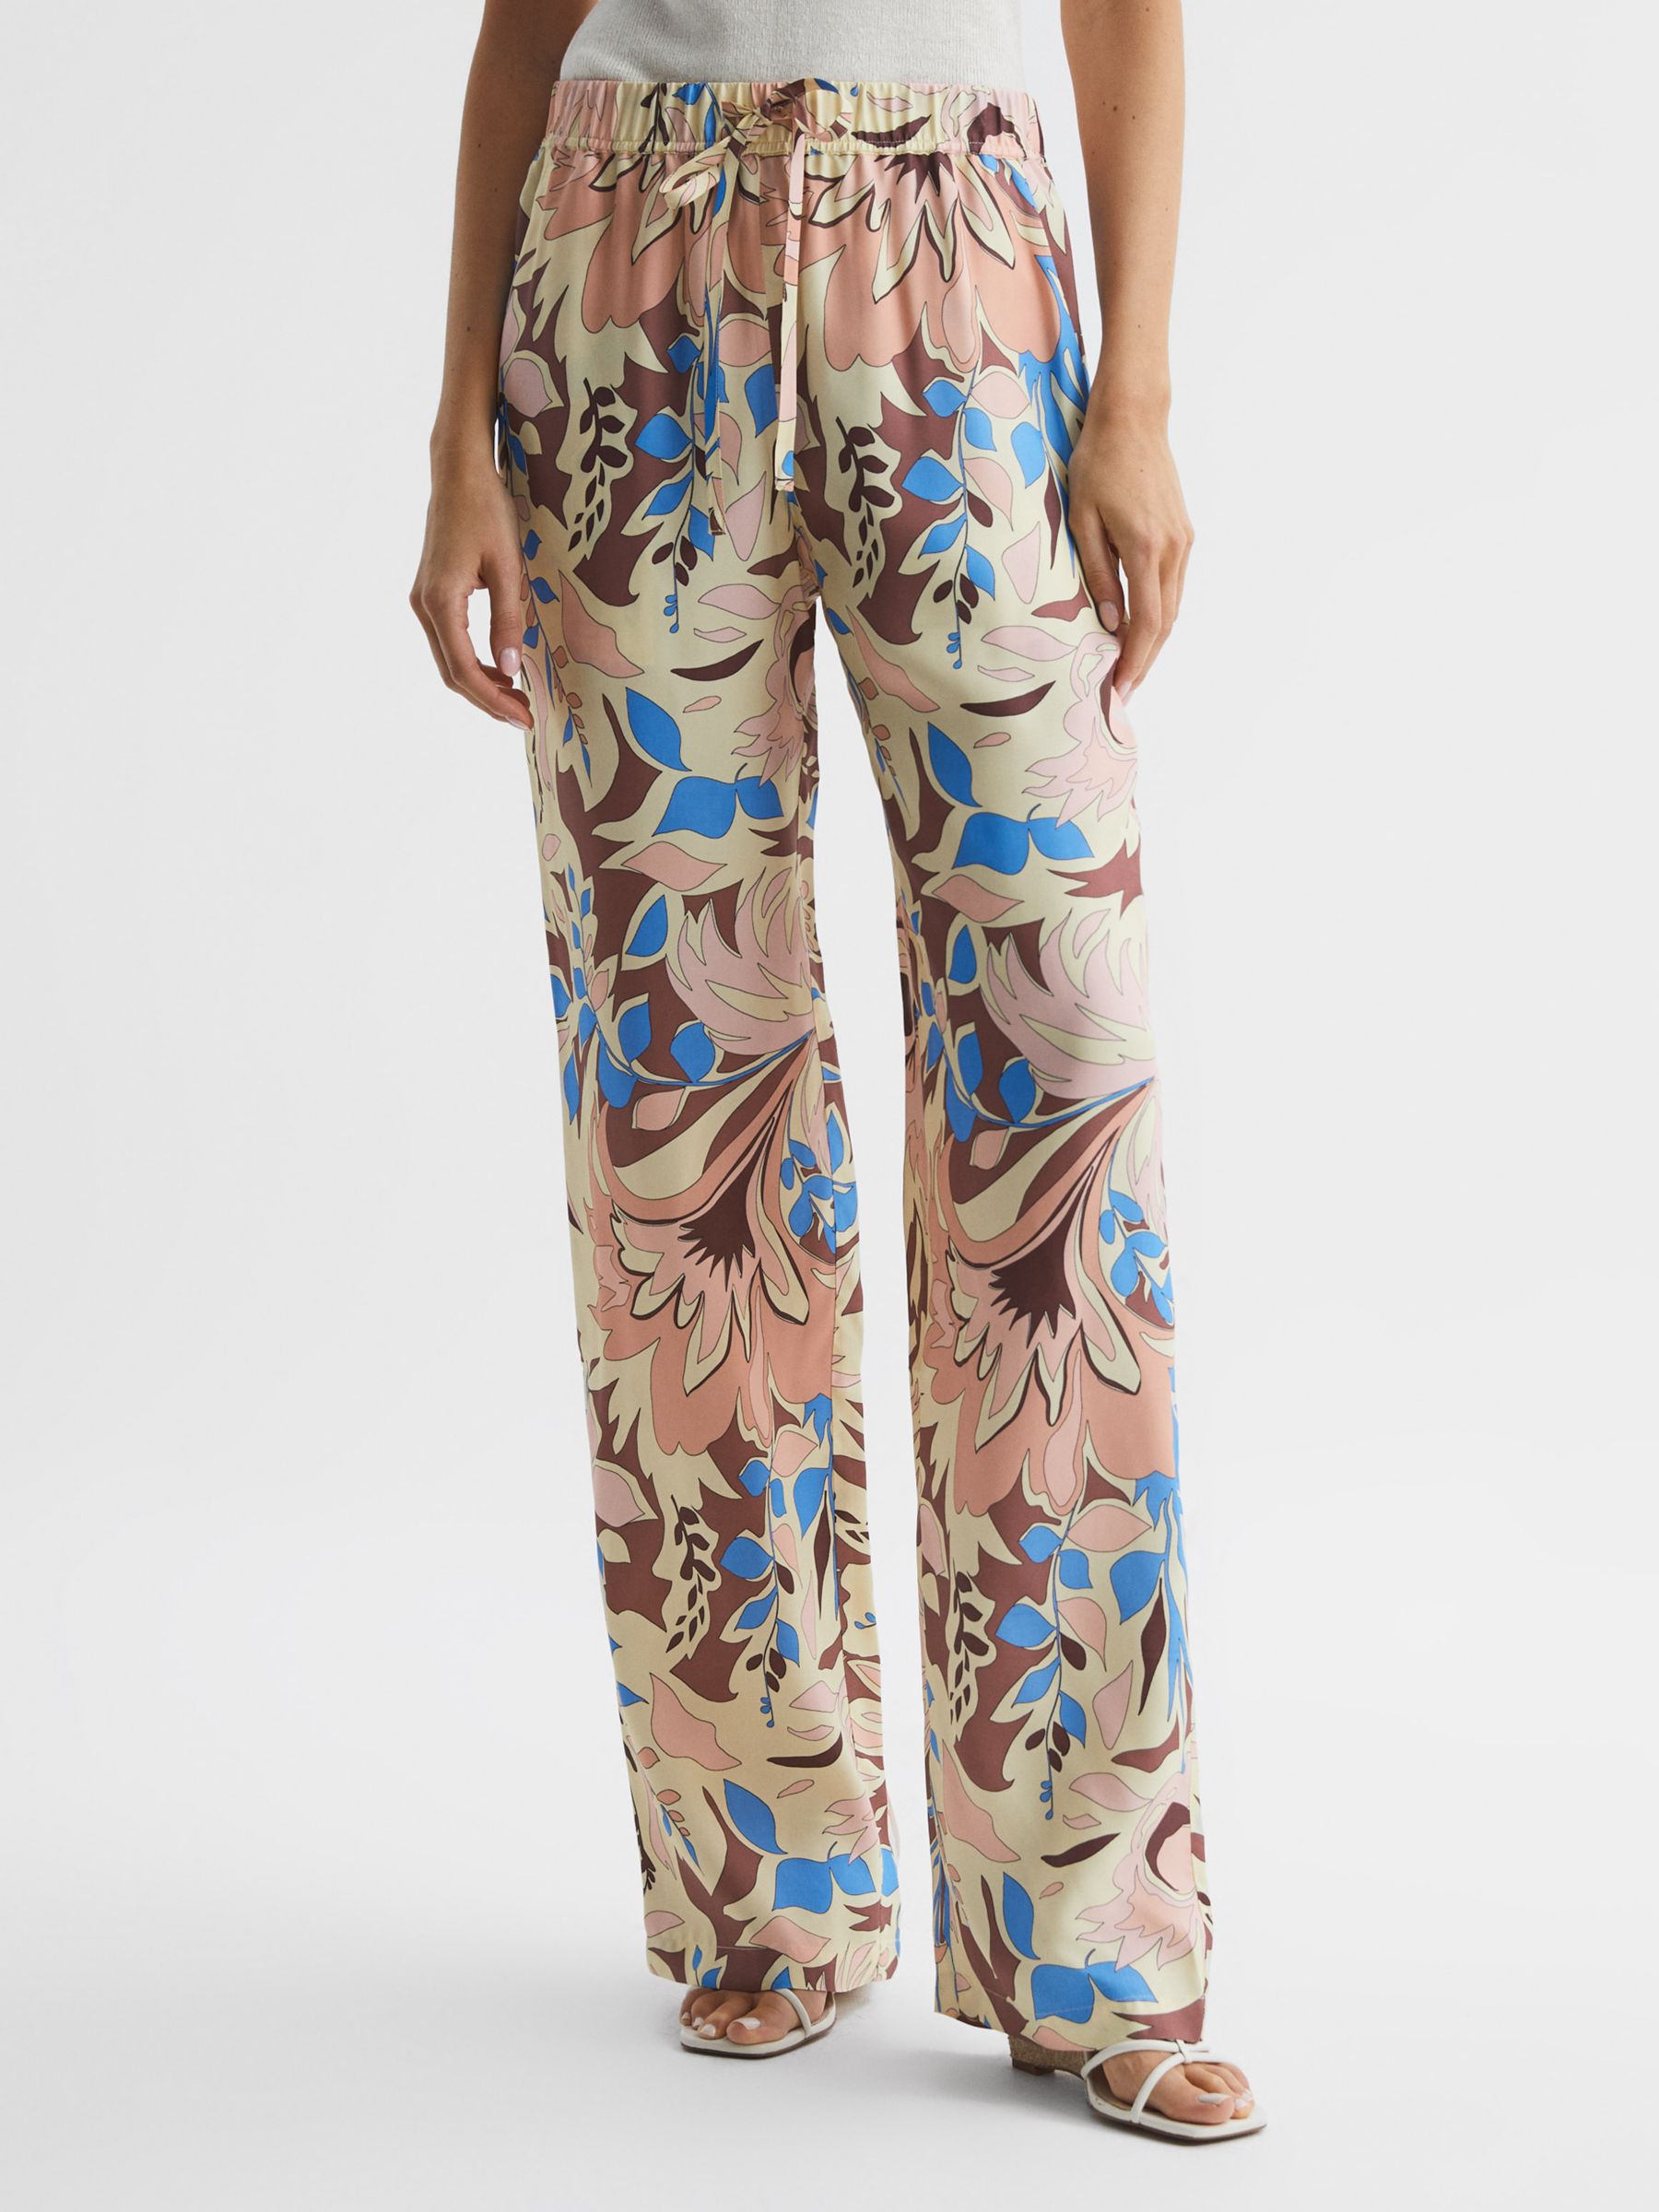 Womens Floral Pants : Target